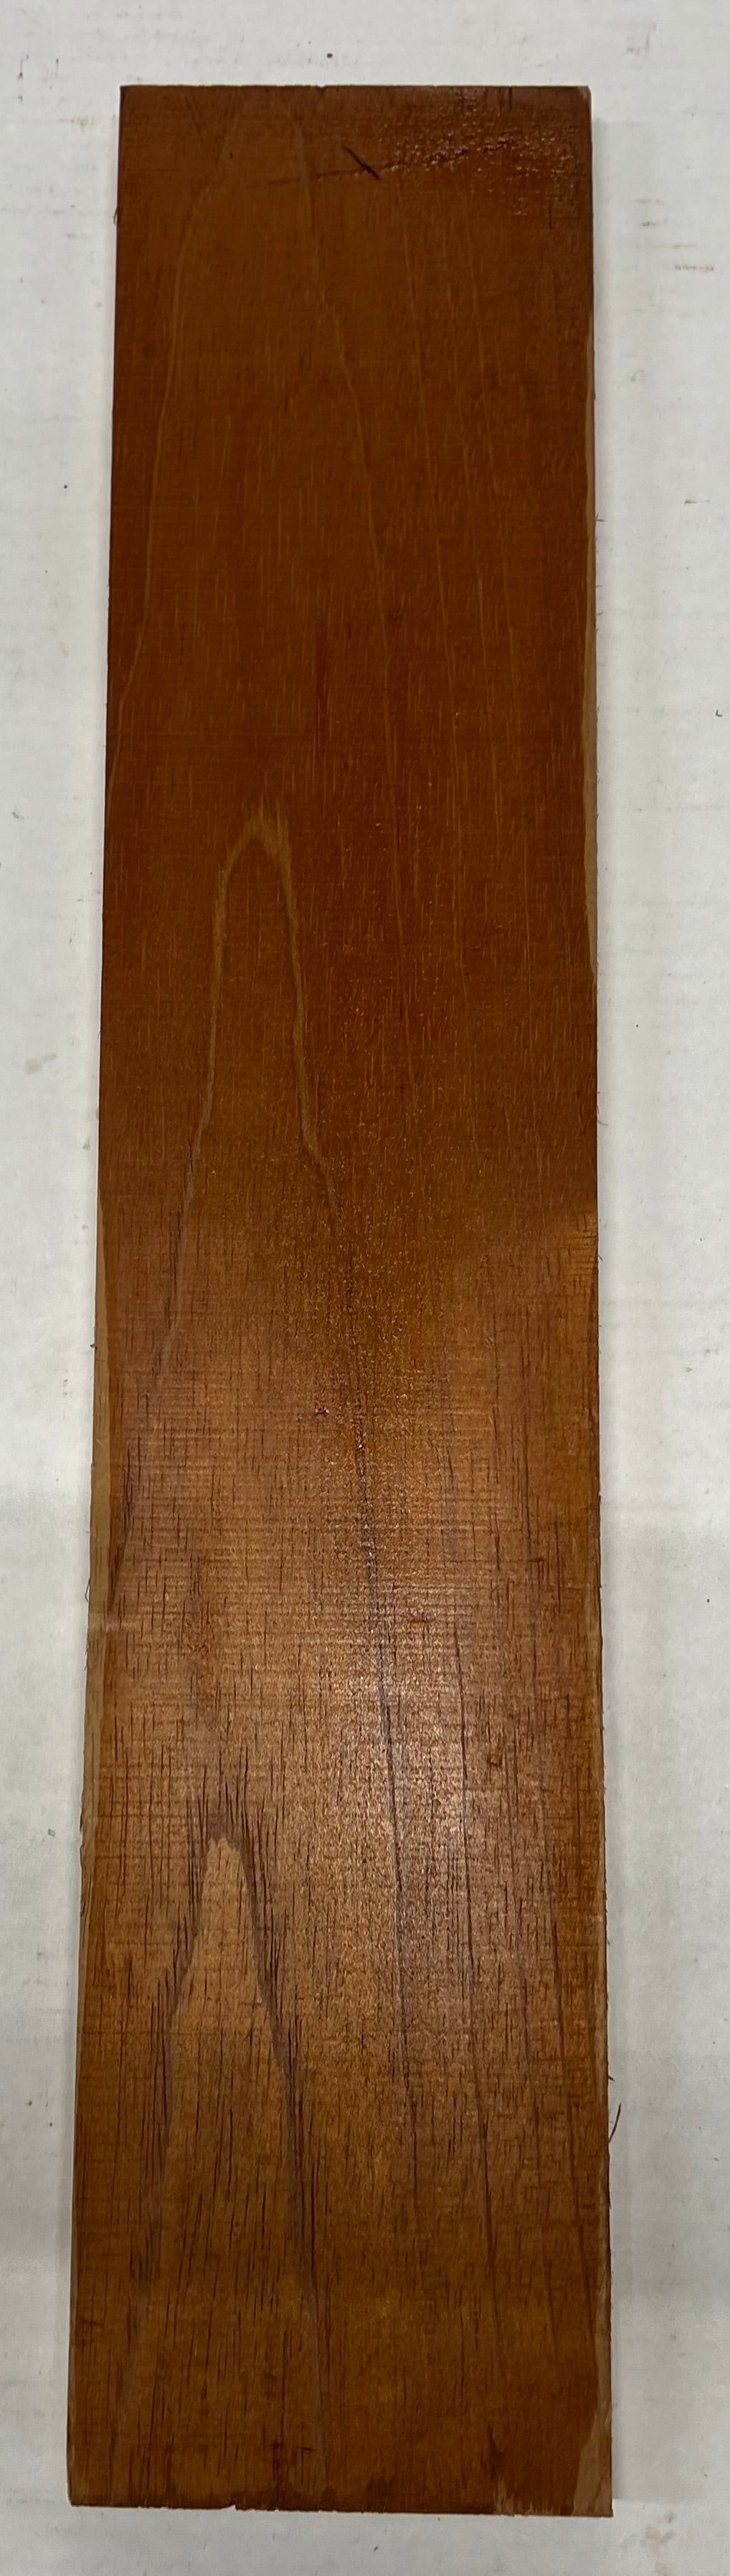 Spanish Cedar Thin Stock Three Dimensional Lumber Board 24&quot;x5&quot;x1/2&quot; 